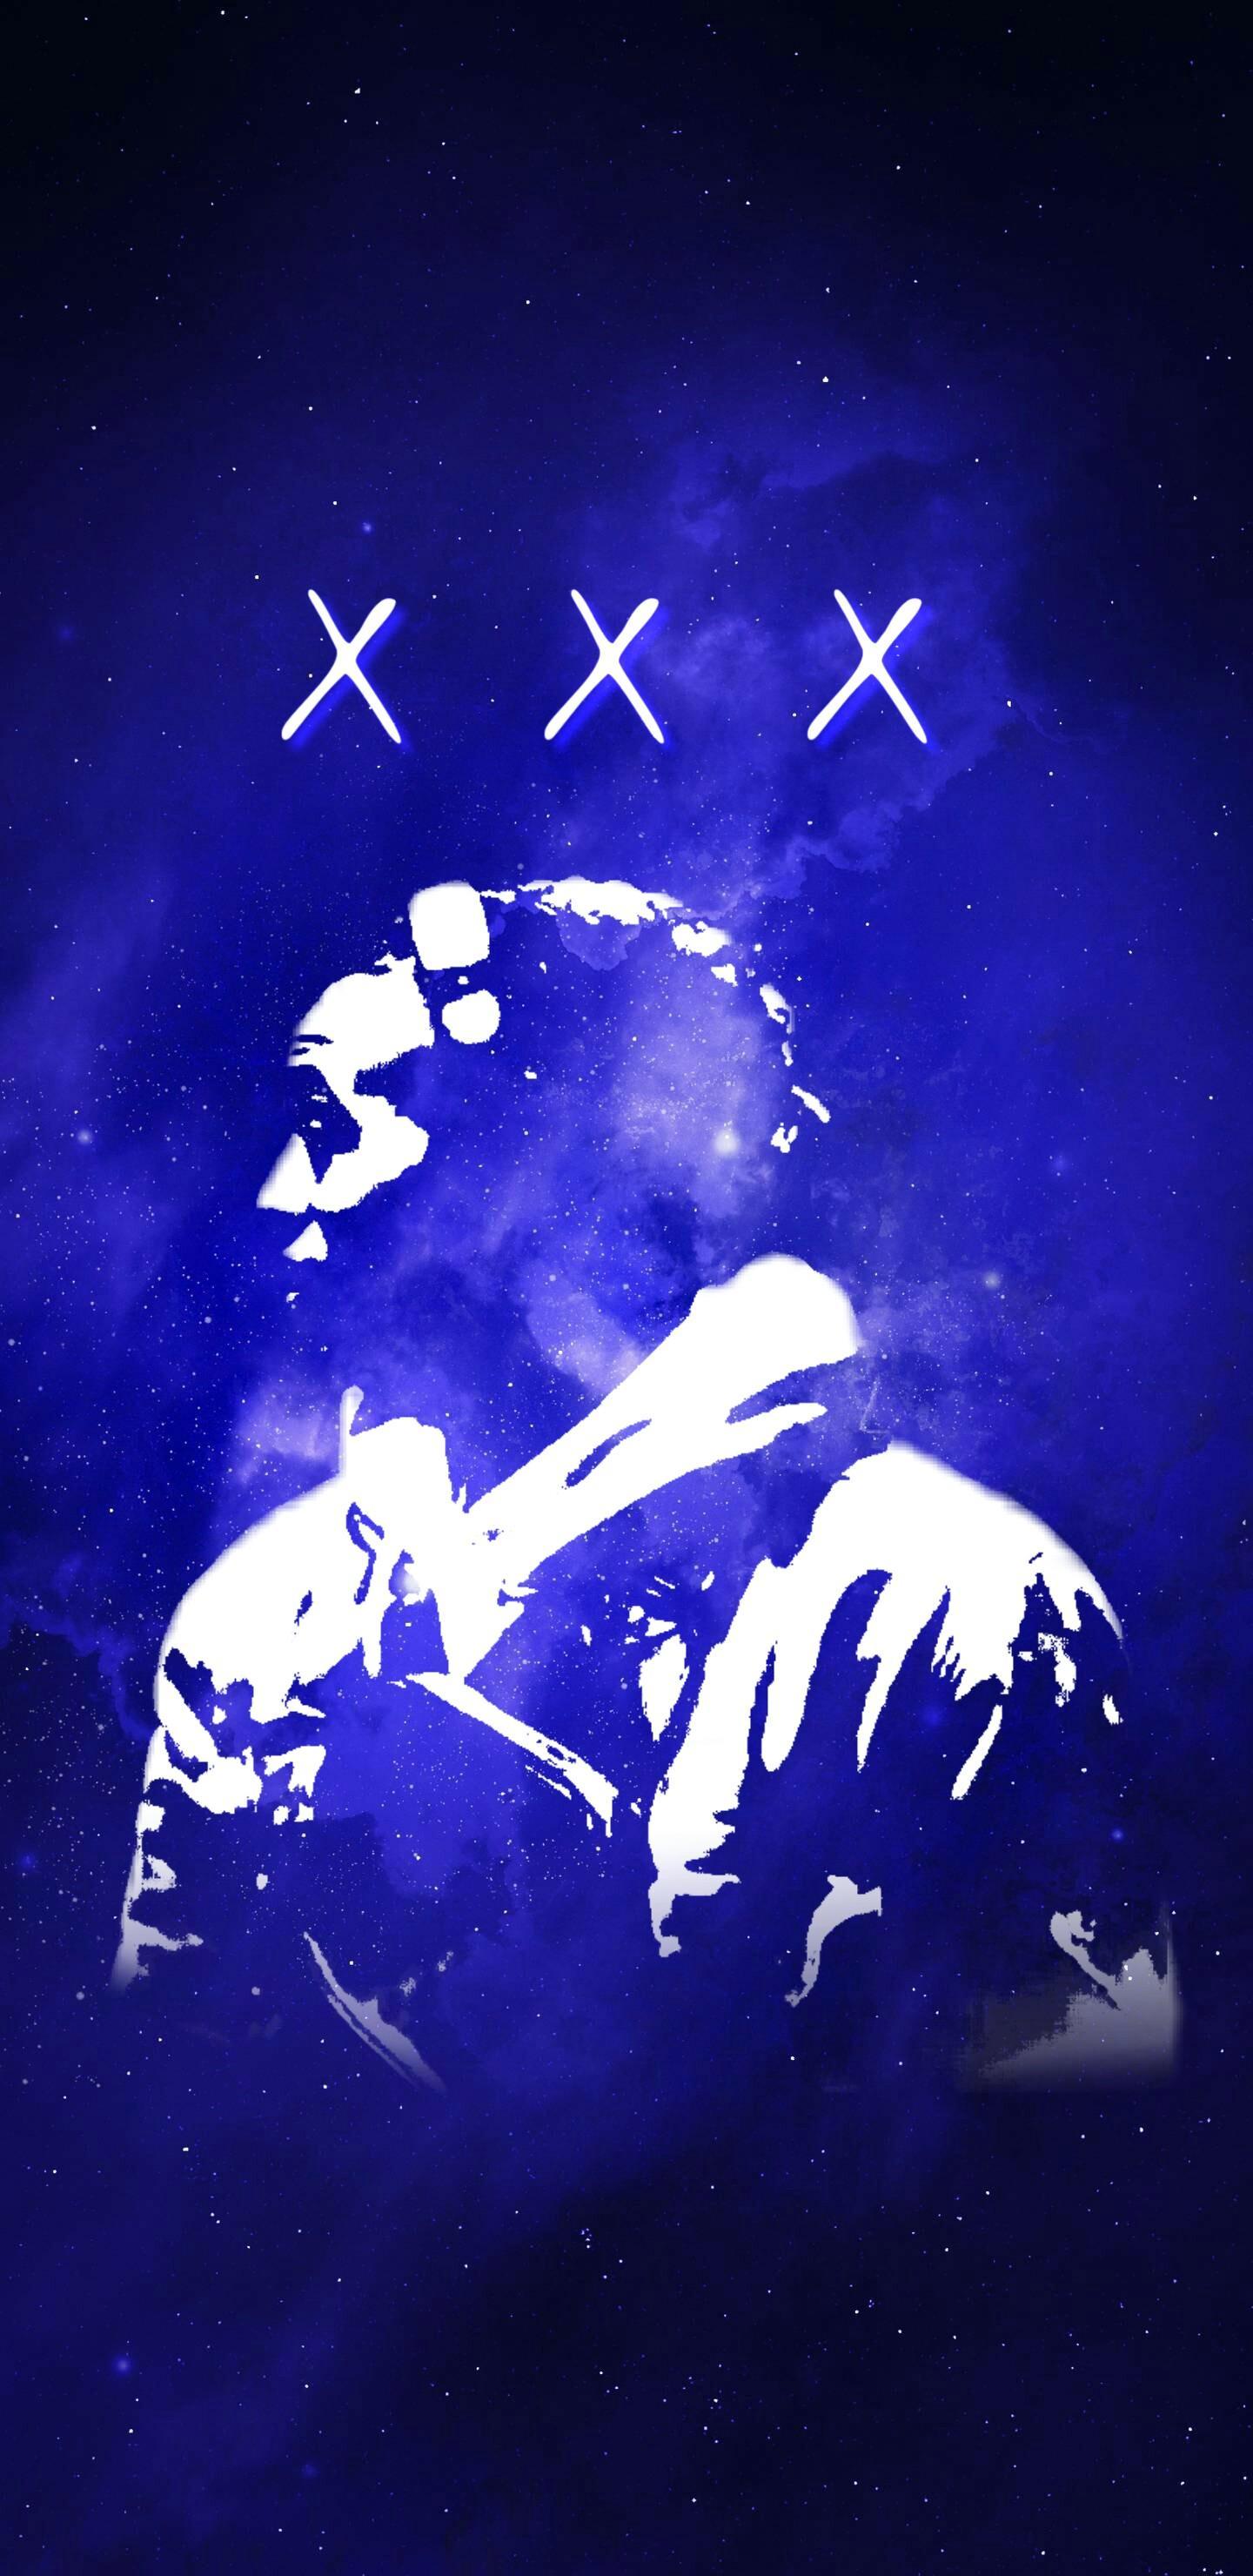 XXXTentacion Blue Wallpapers - Top Free XXXTentacion Blue Backgrounds